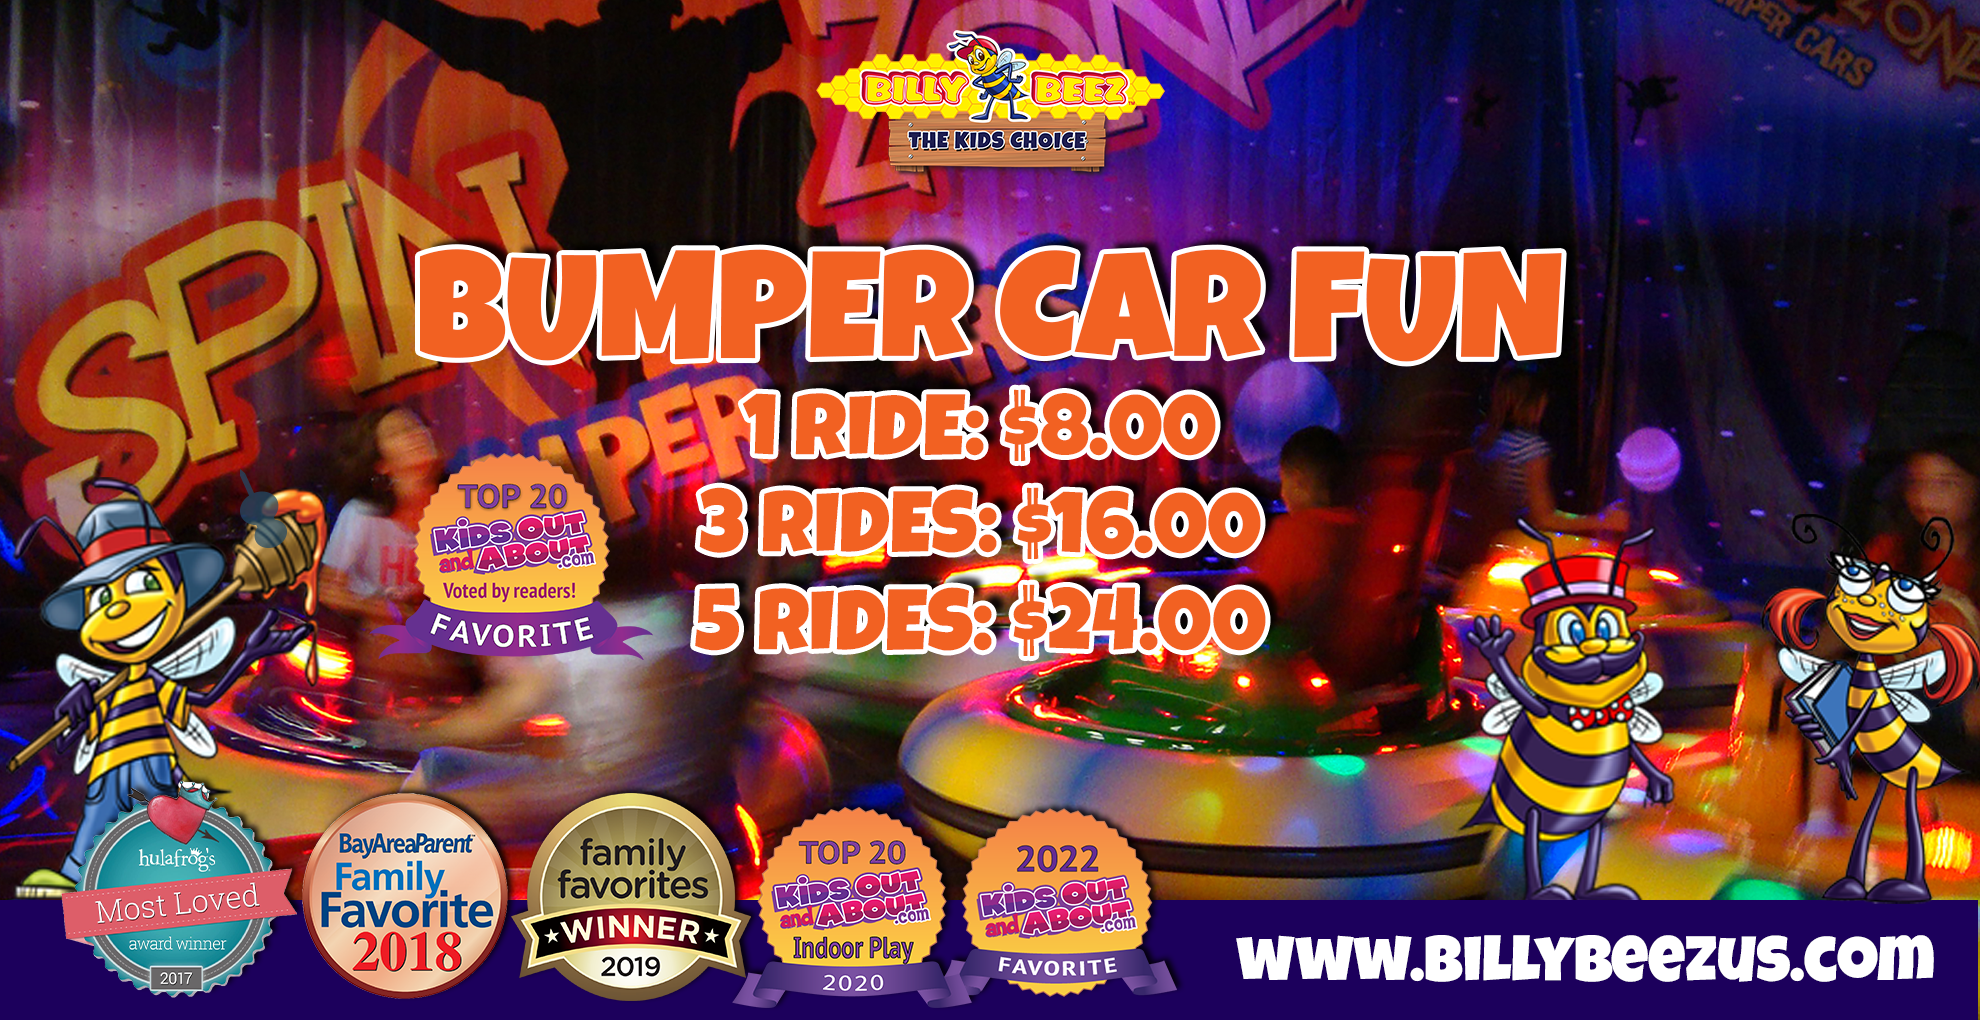 Bumper Car Fun 1 Ride: $8.00 3 Rides: $16.00 5 Rides: $24.00 www.billybeezus.com